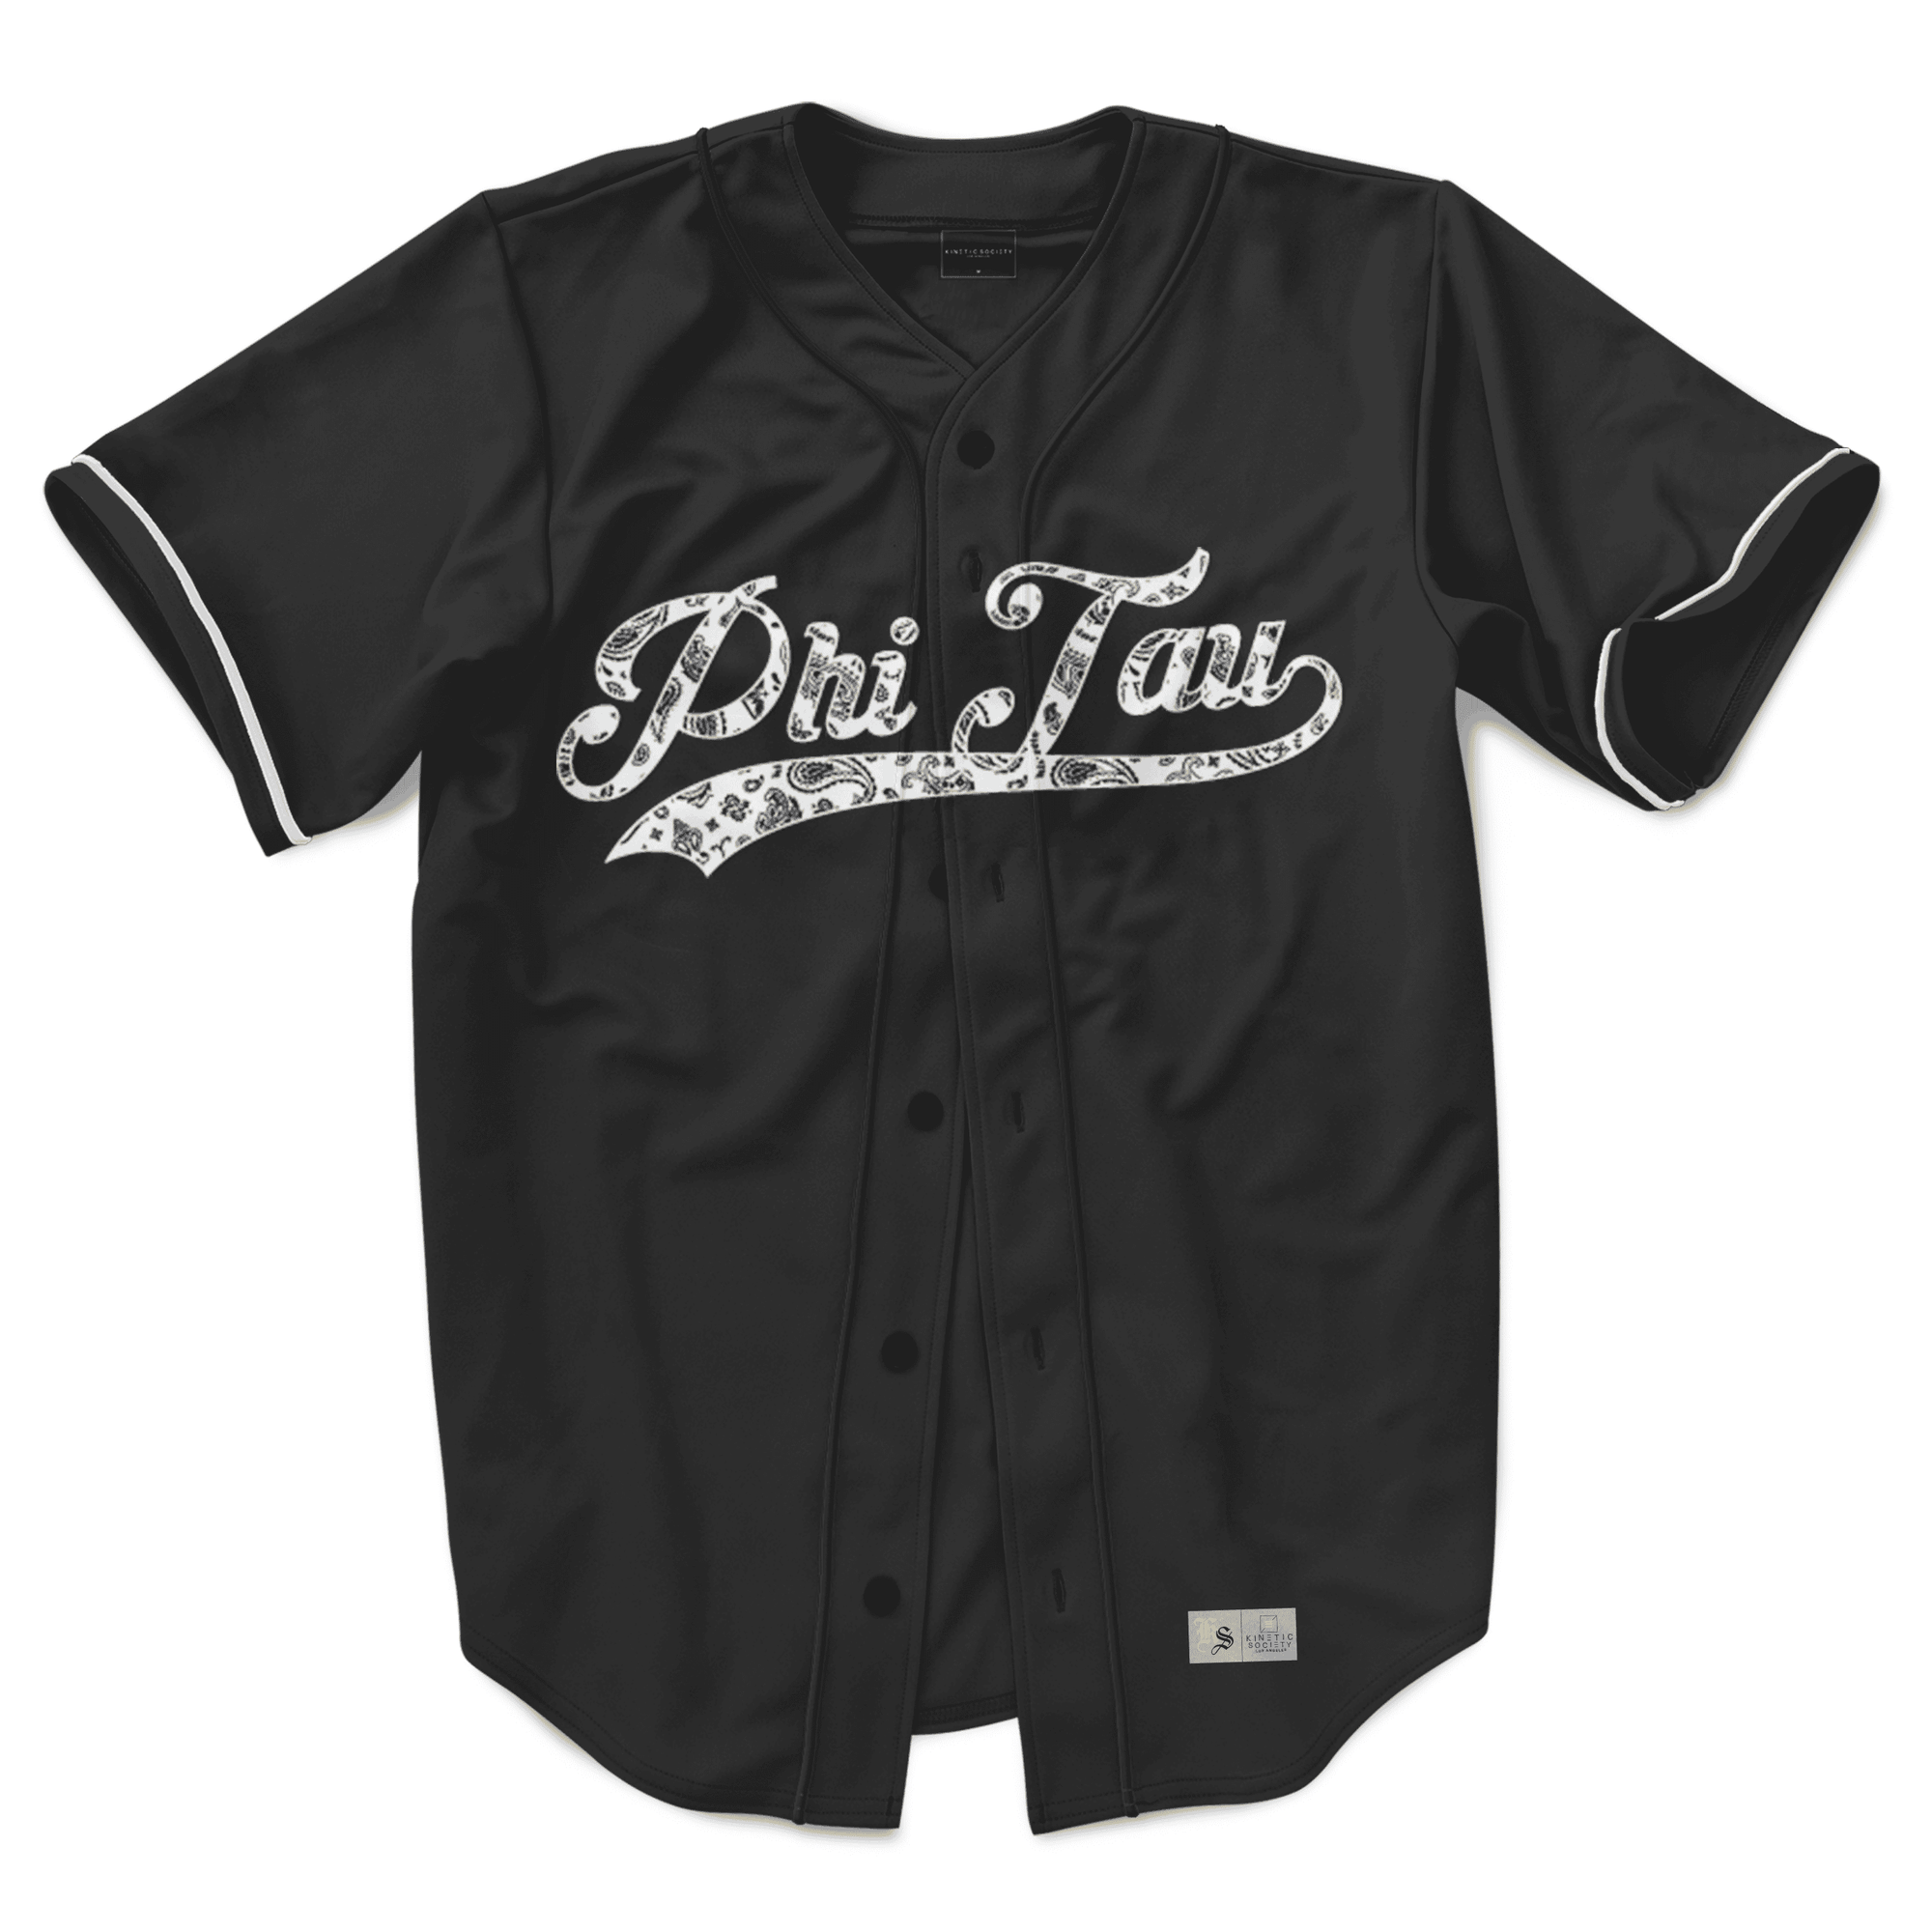 Phi Kappa Tau - Paisley Baseball Jersey